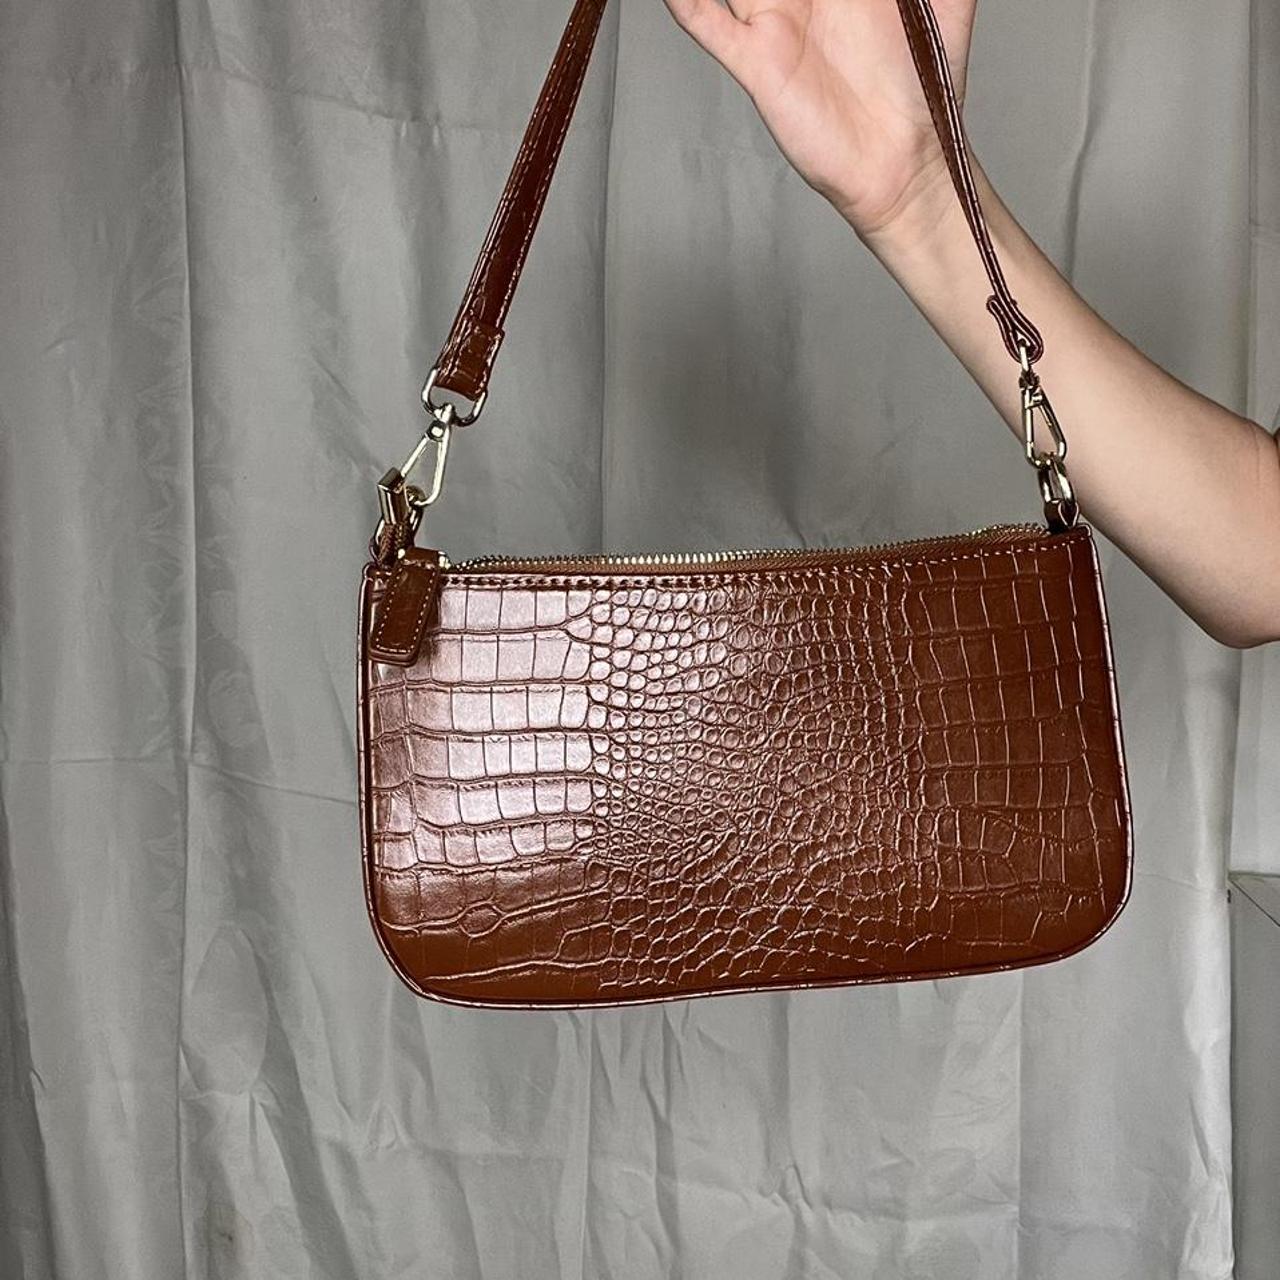 leather handbag for woman dark green - Colette S Alligator Malachite | PAUL  MARIUS